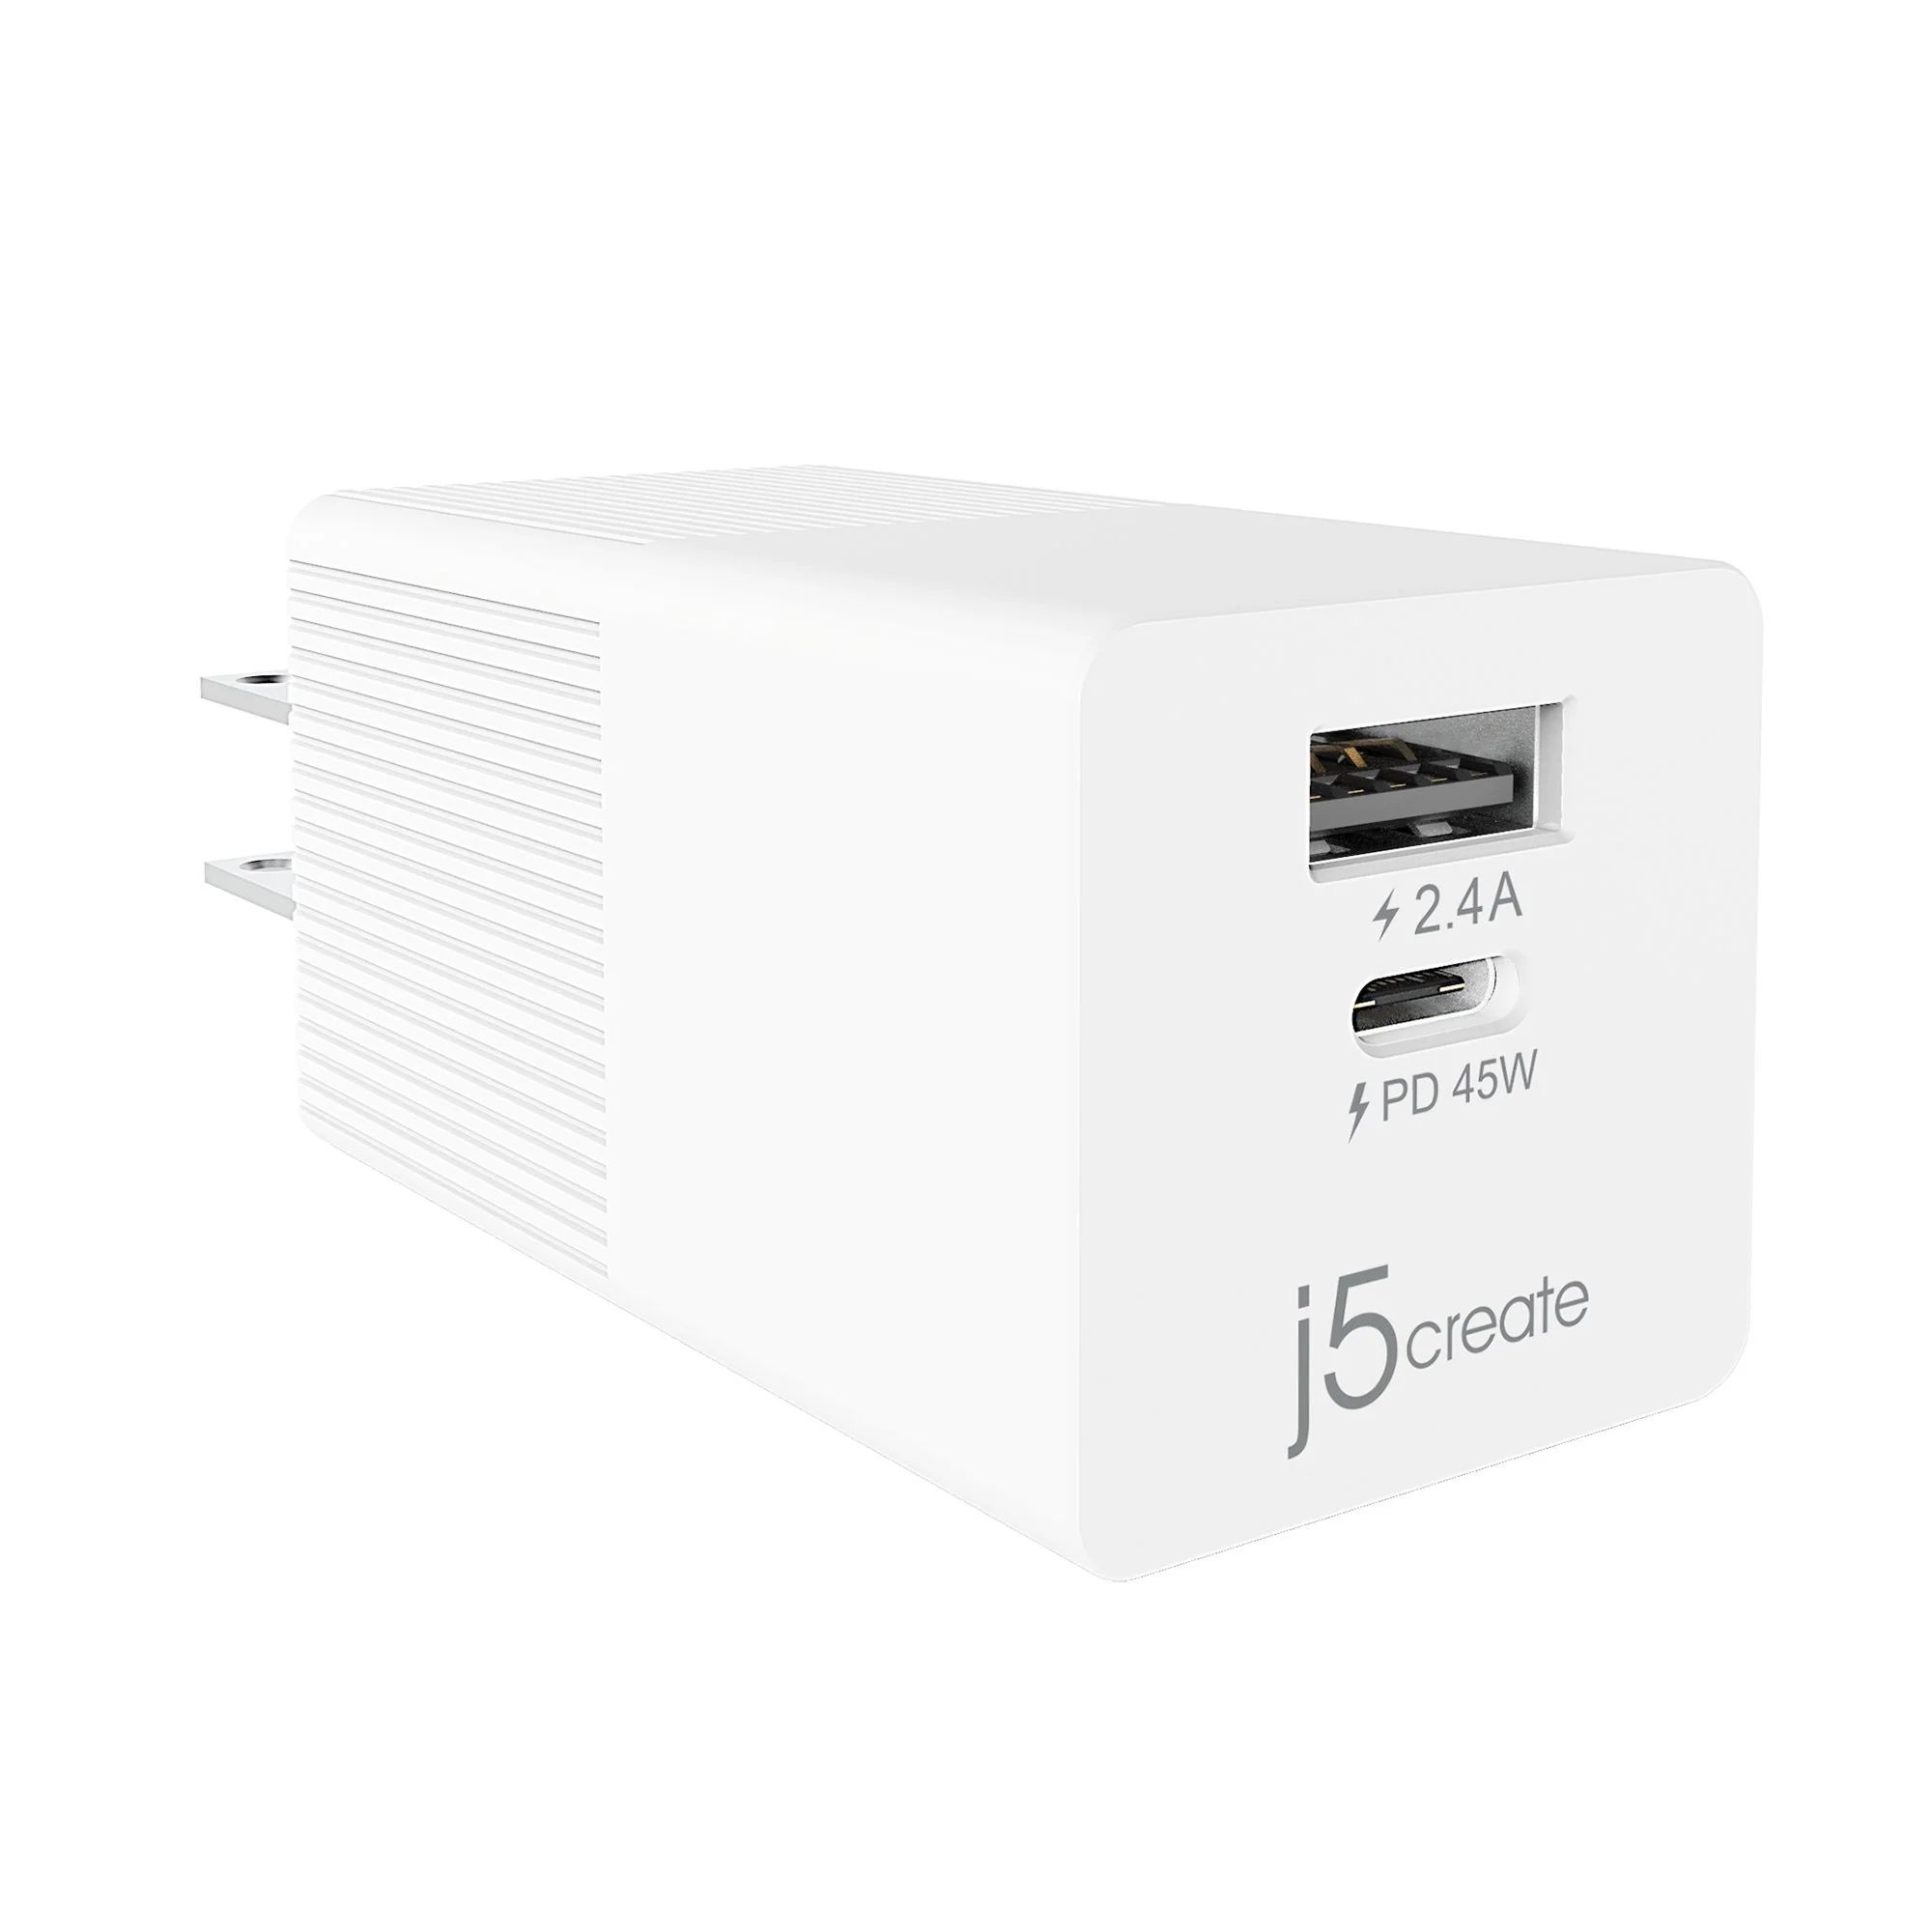 сетевое зарядное устройство j5create 20w pd usb c wall charger j5create 20w pd usb c wall charger Сетевое зарядное устройство j5create 45W JUP2445